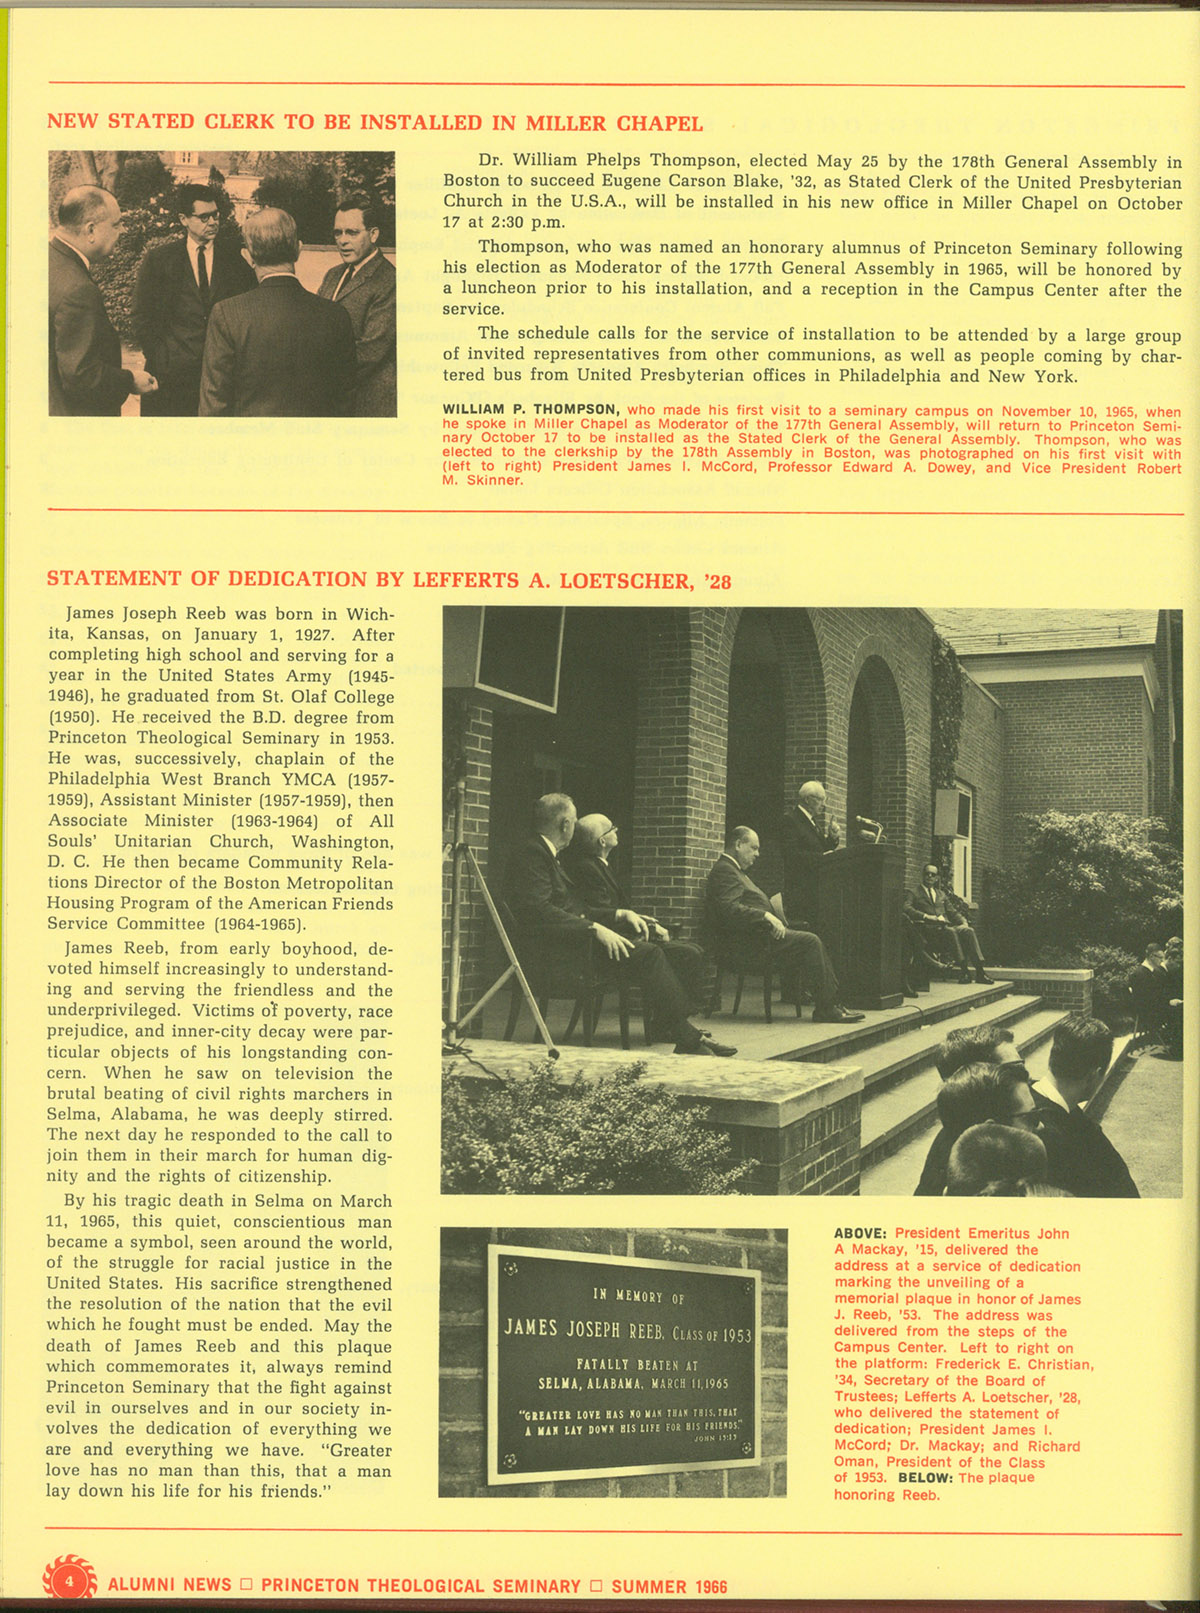 Alumni News, Summer 1966